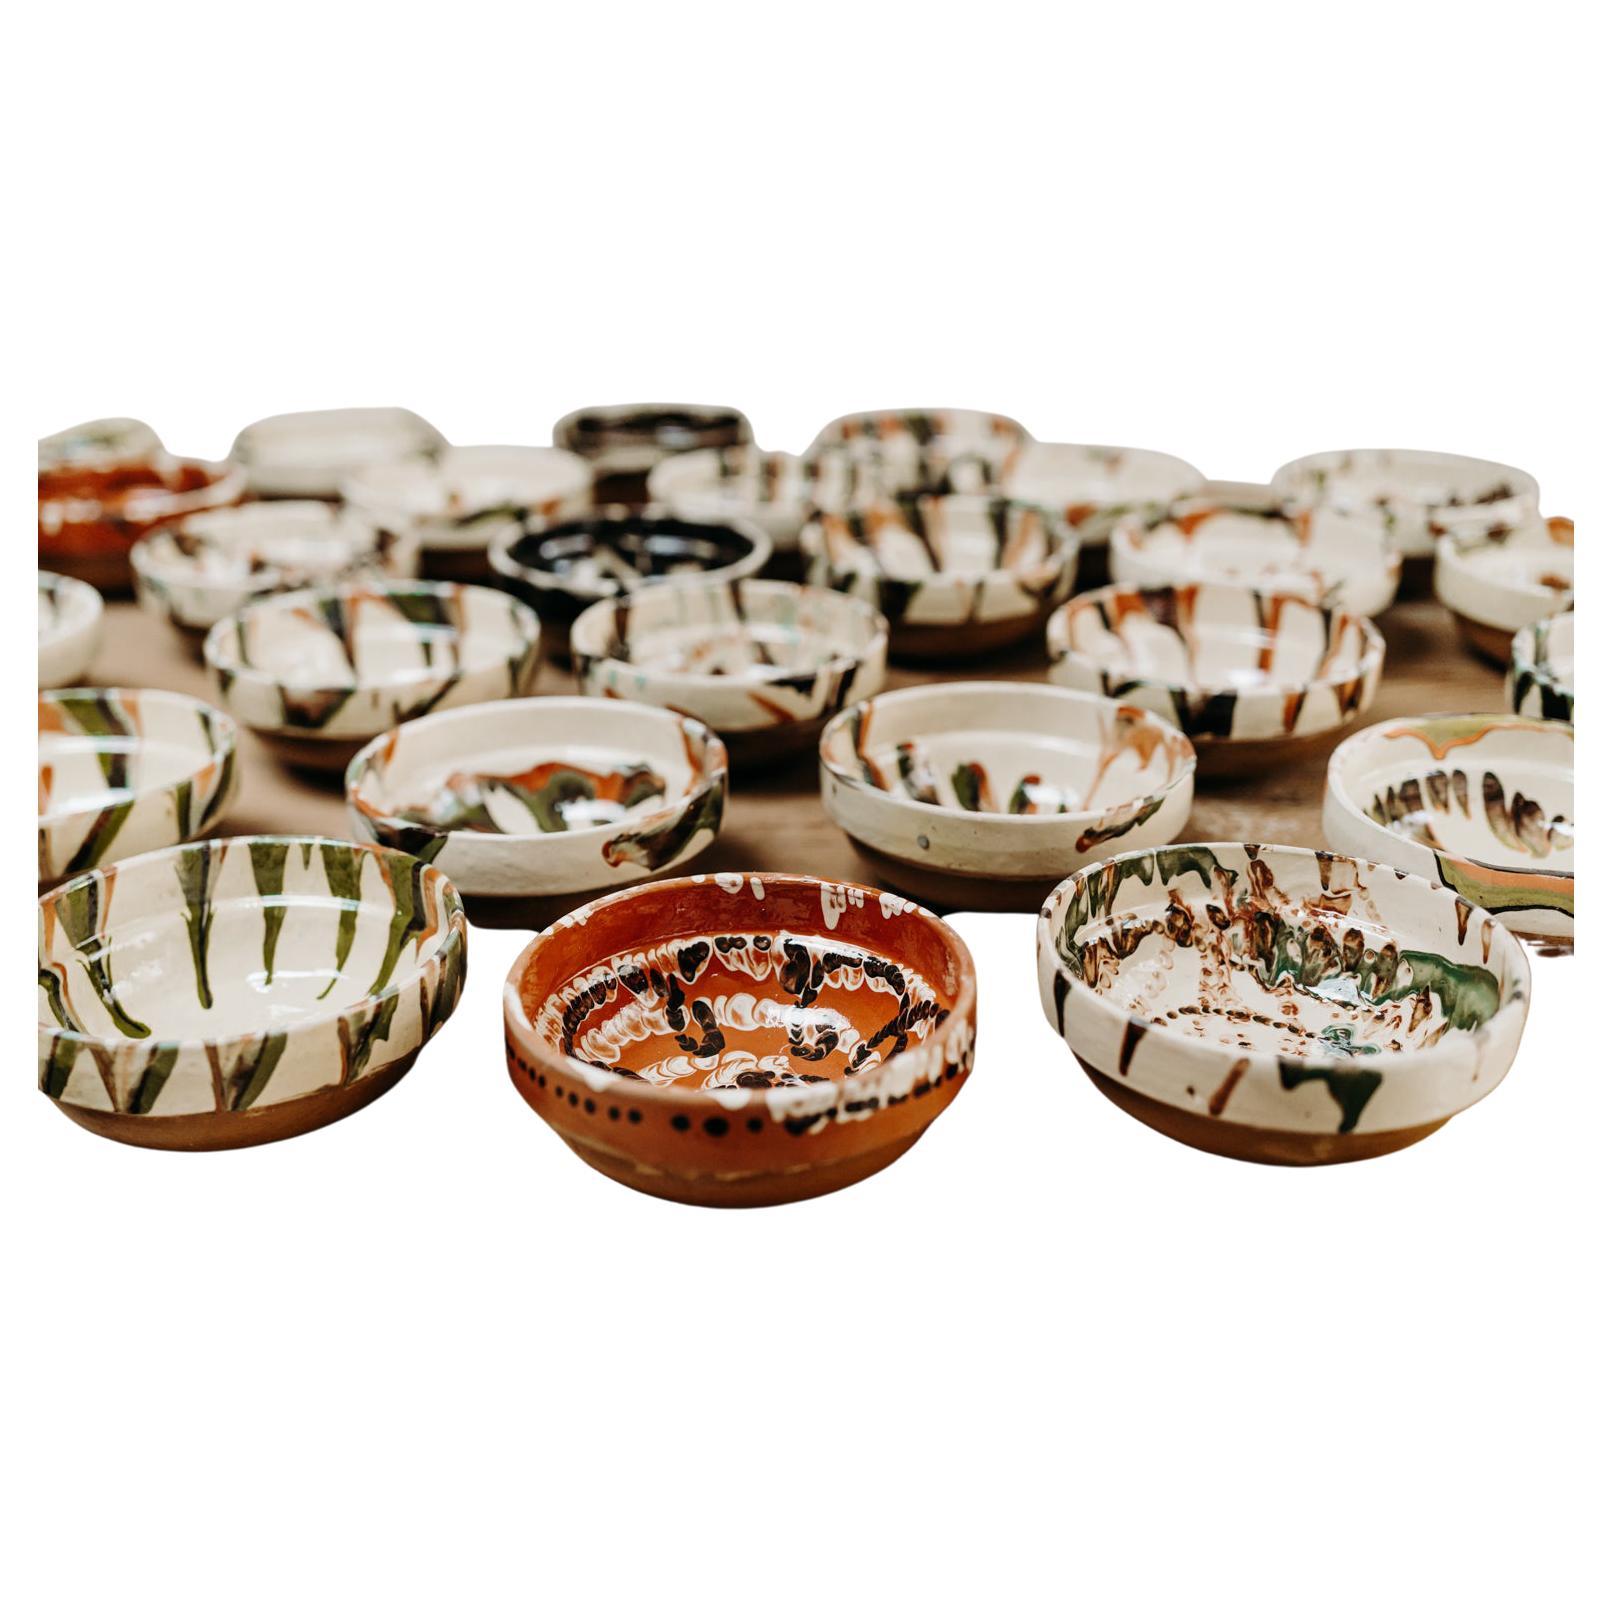 Glazed Terra Cotta Bowls